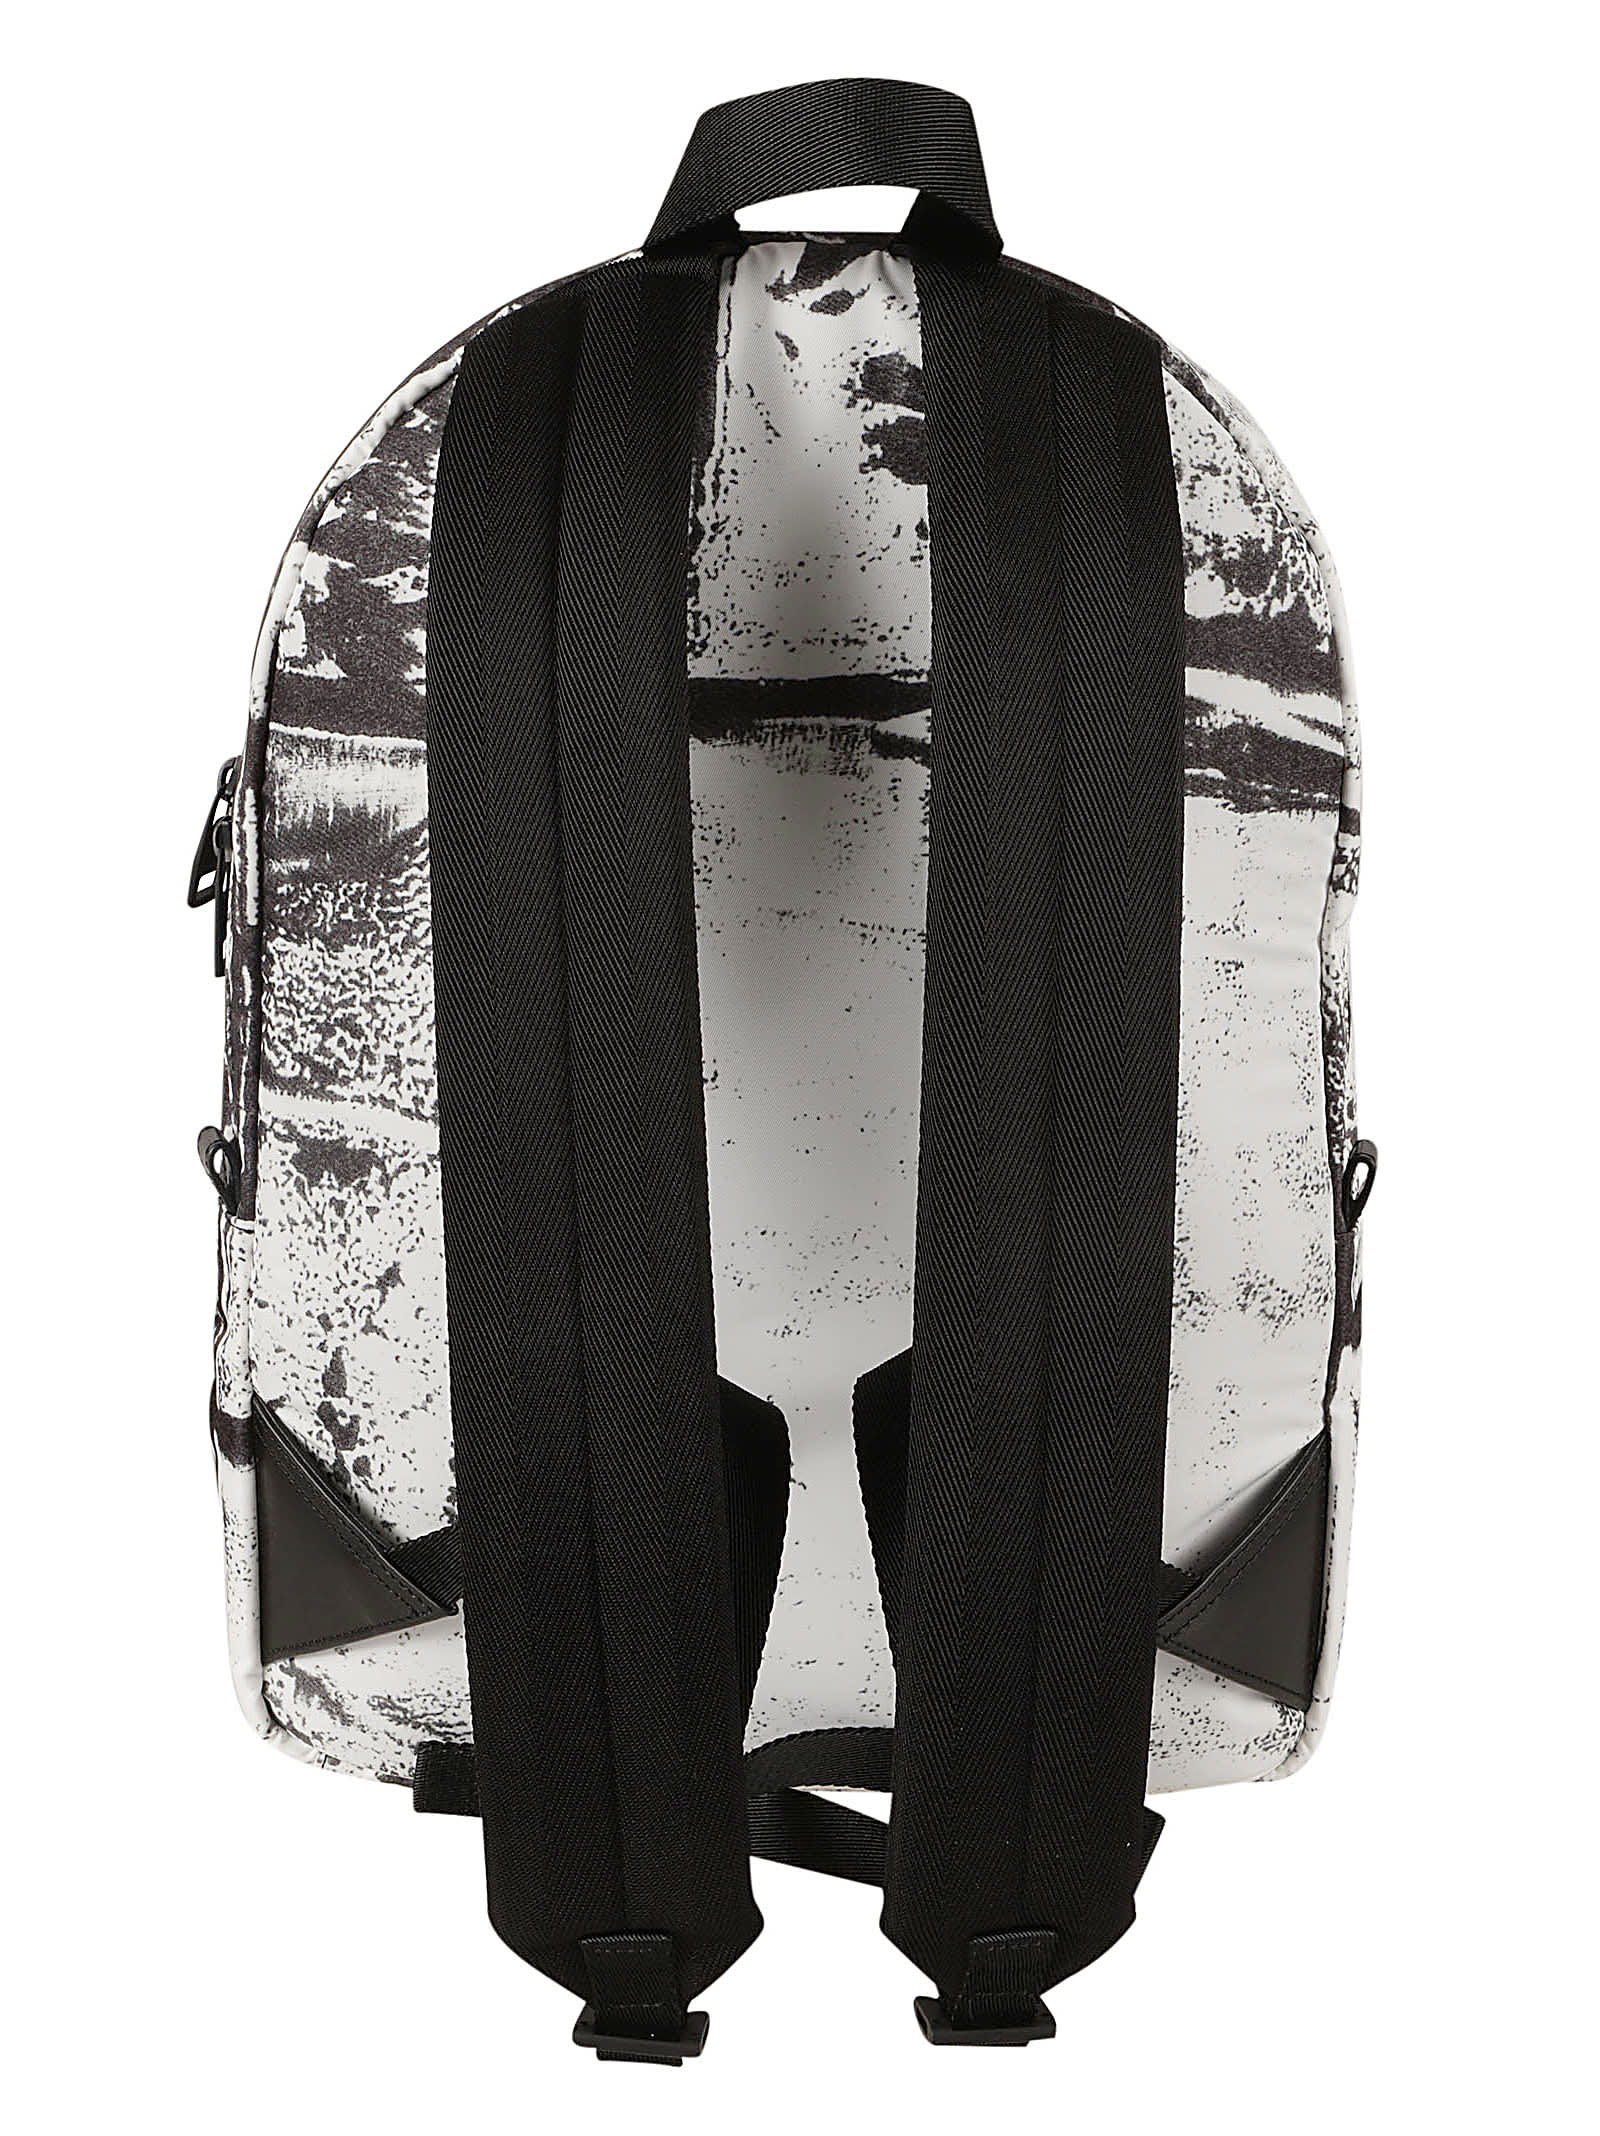 Shop Alexander Mcqueen Metropolitan Backpack In Black/white